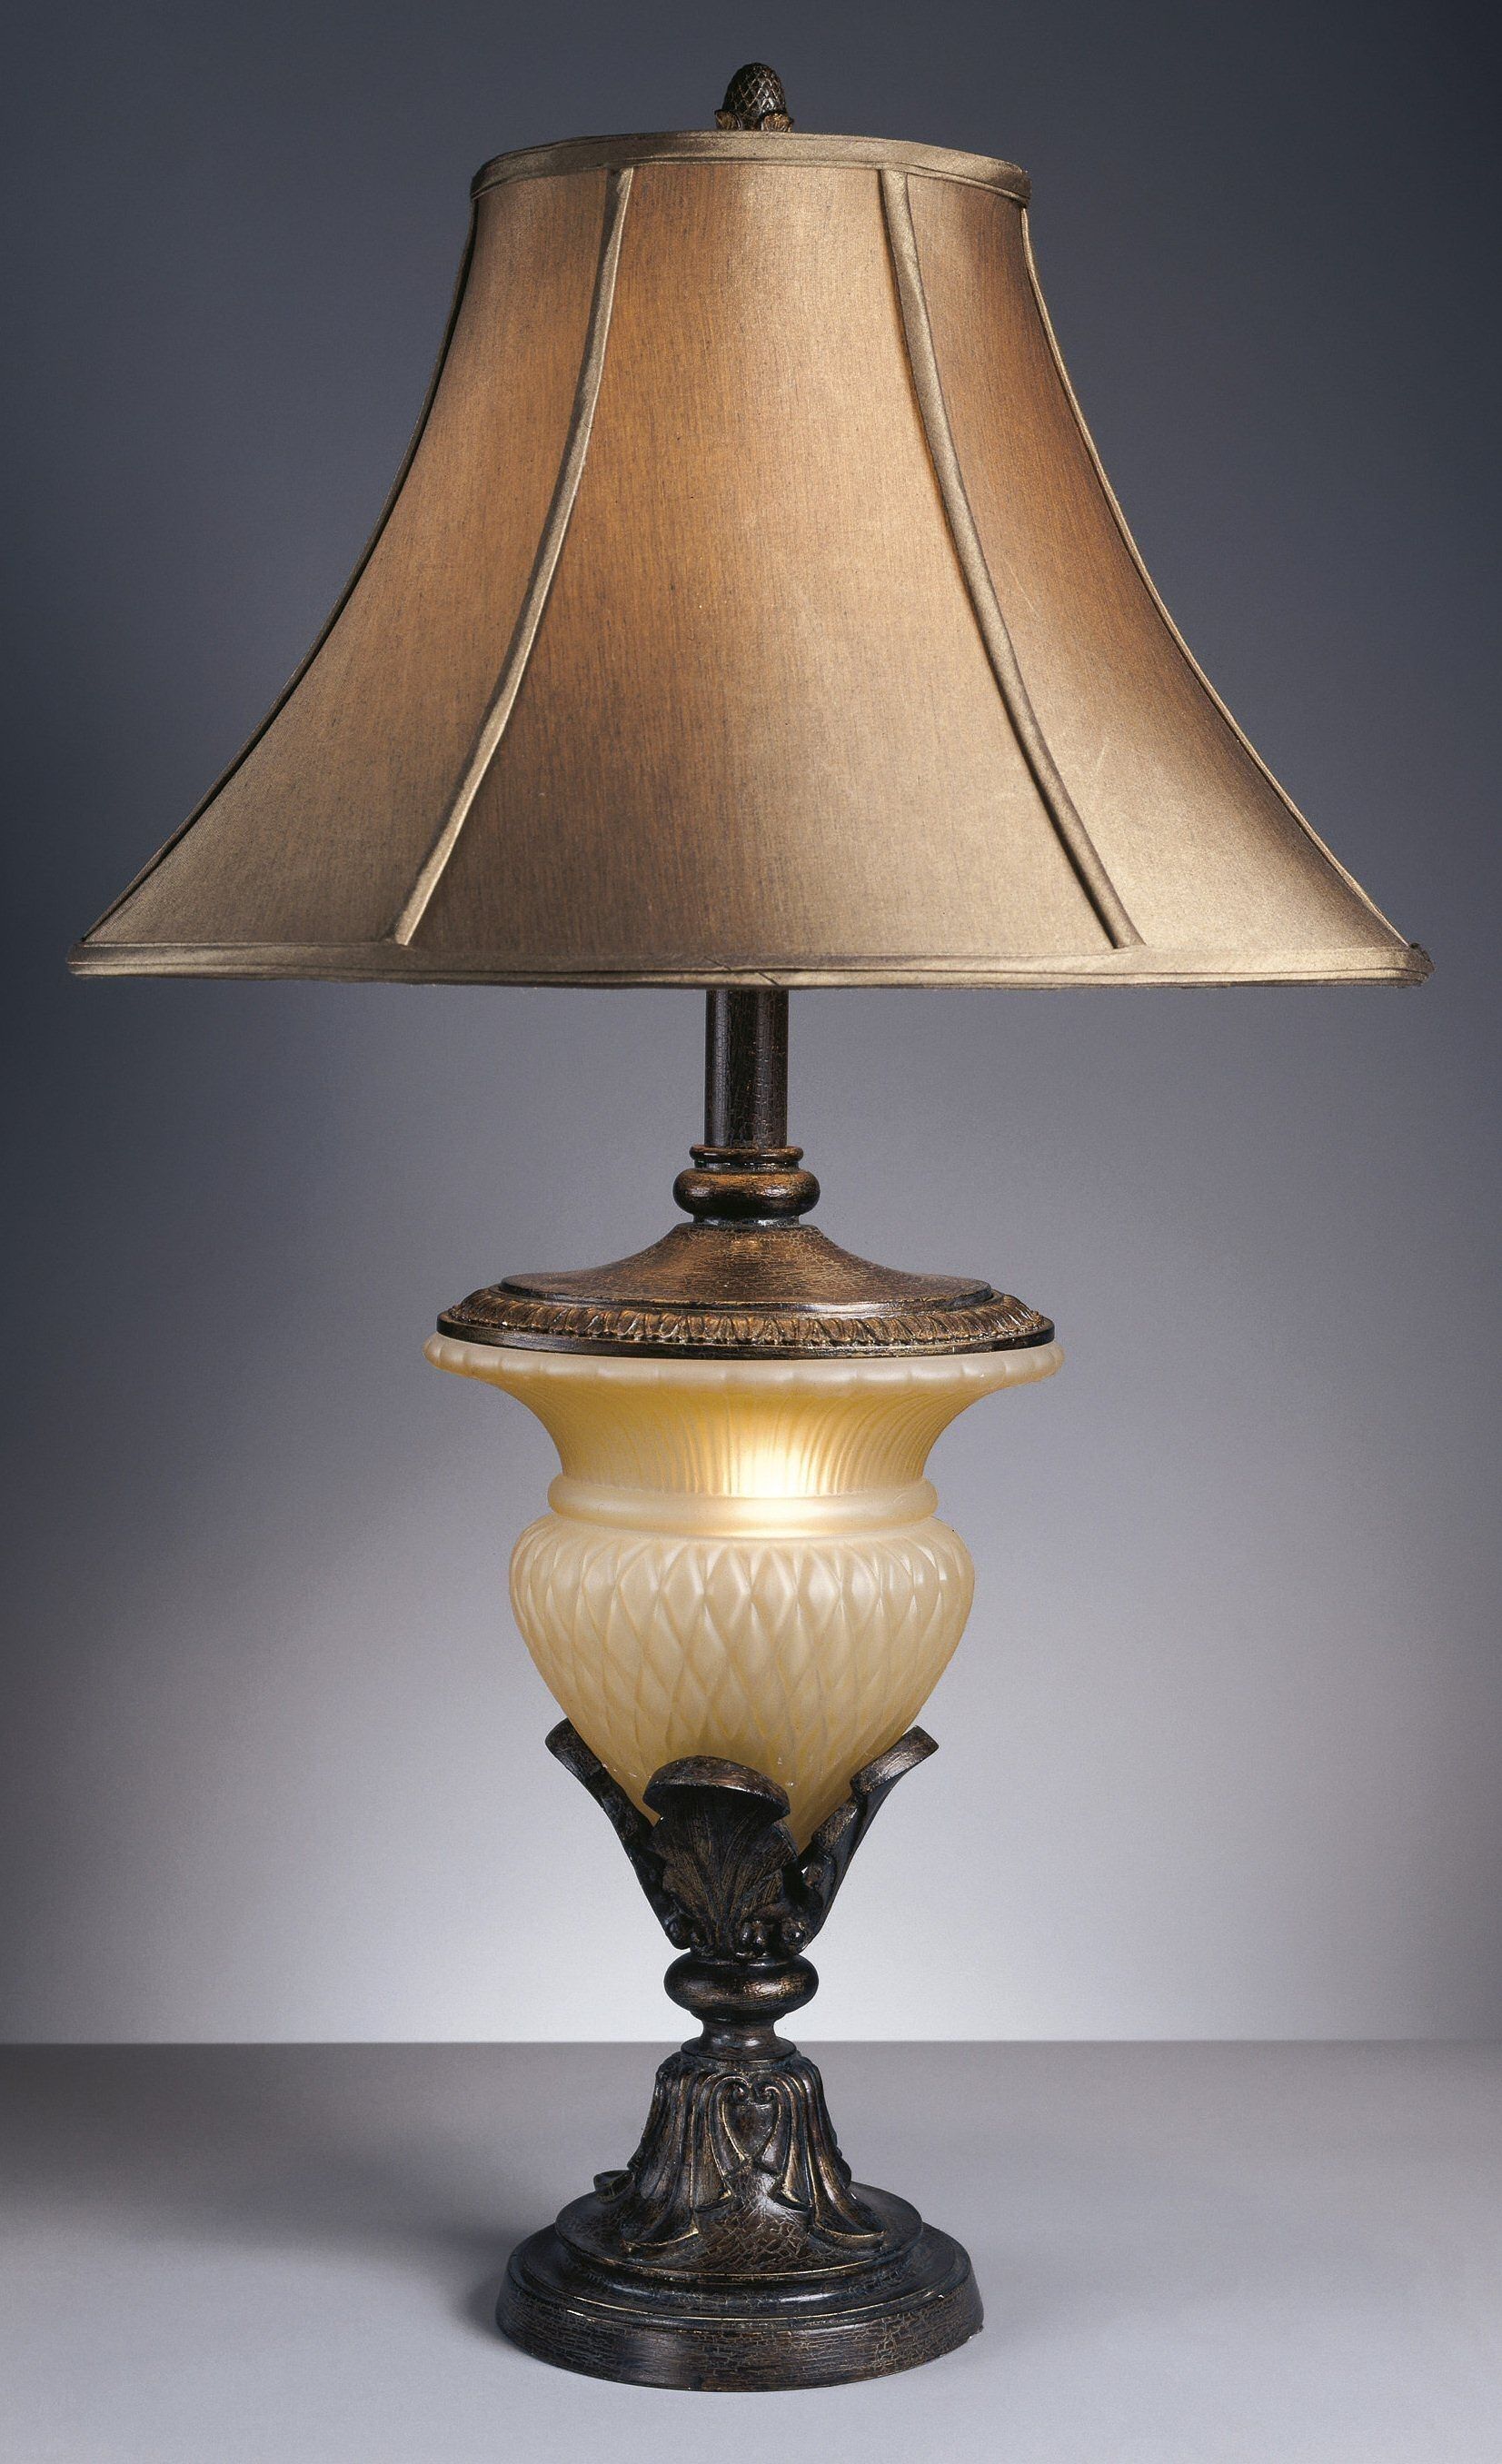 2 light table lamp